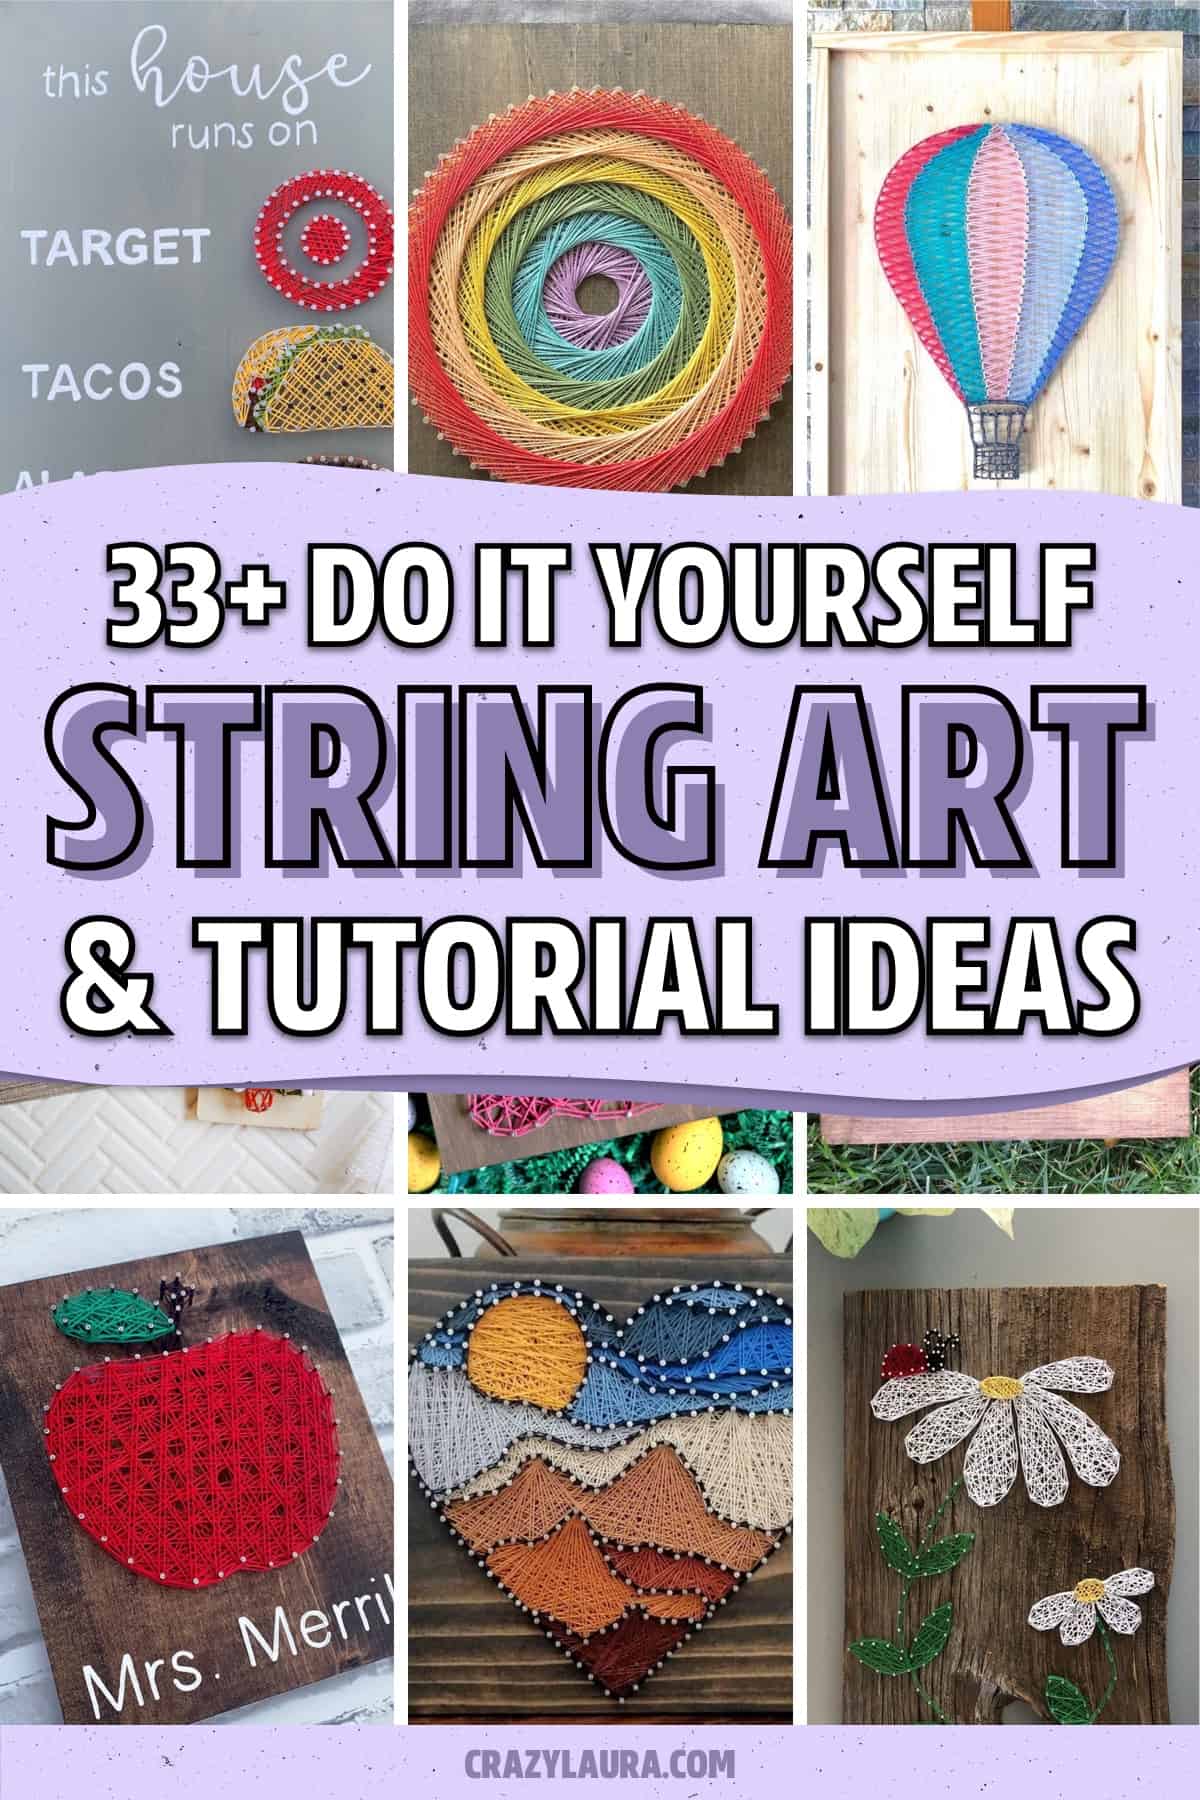 nail and string art ideas